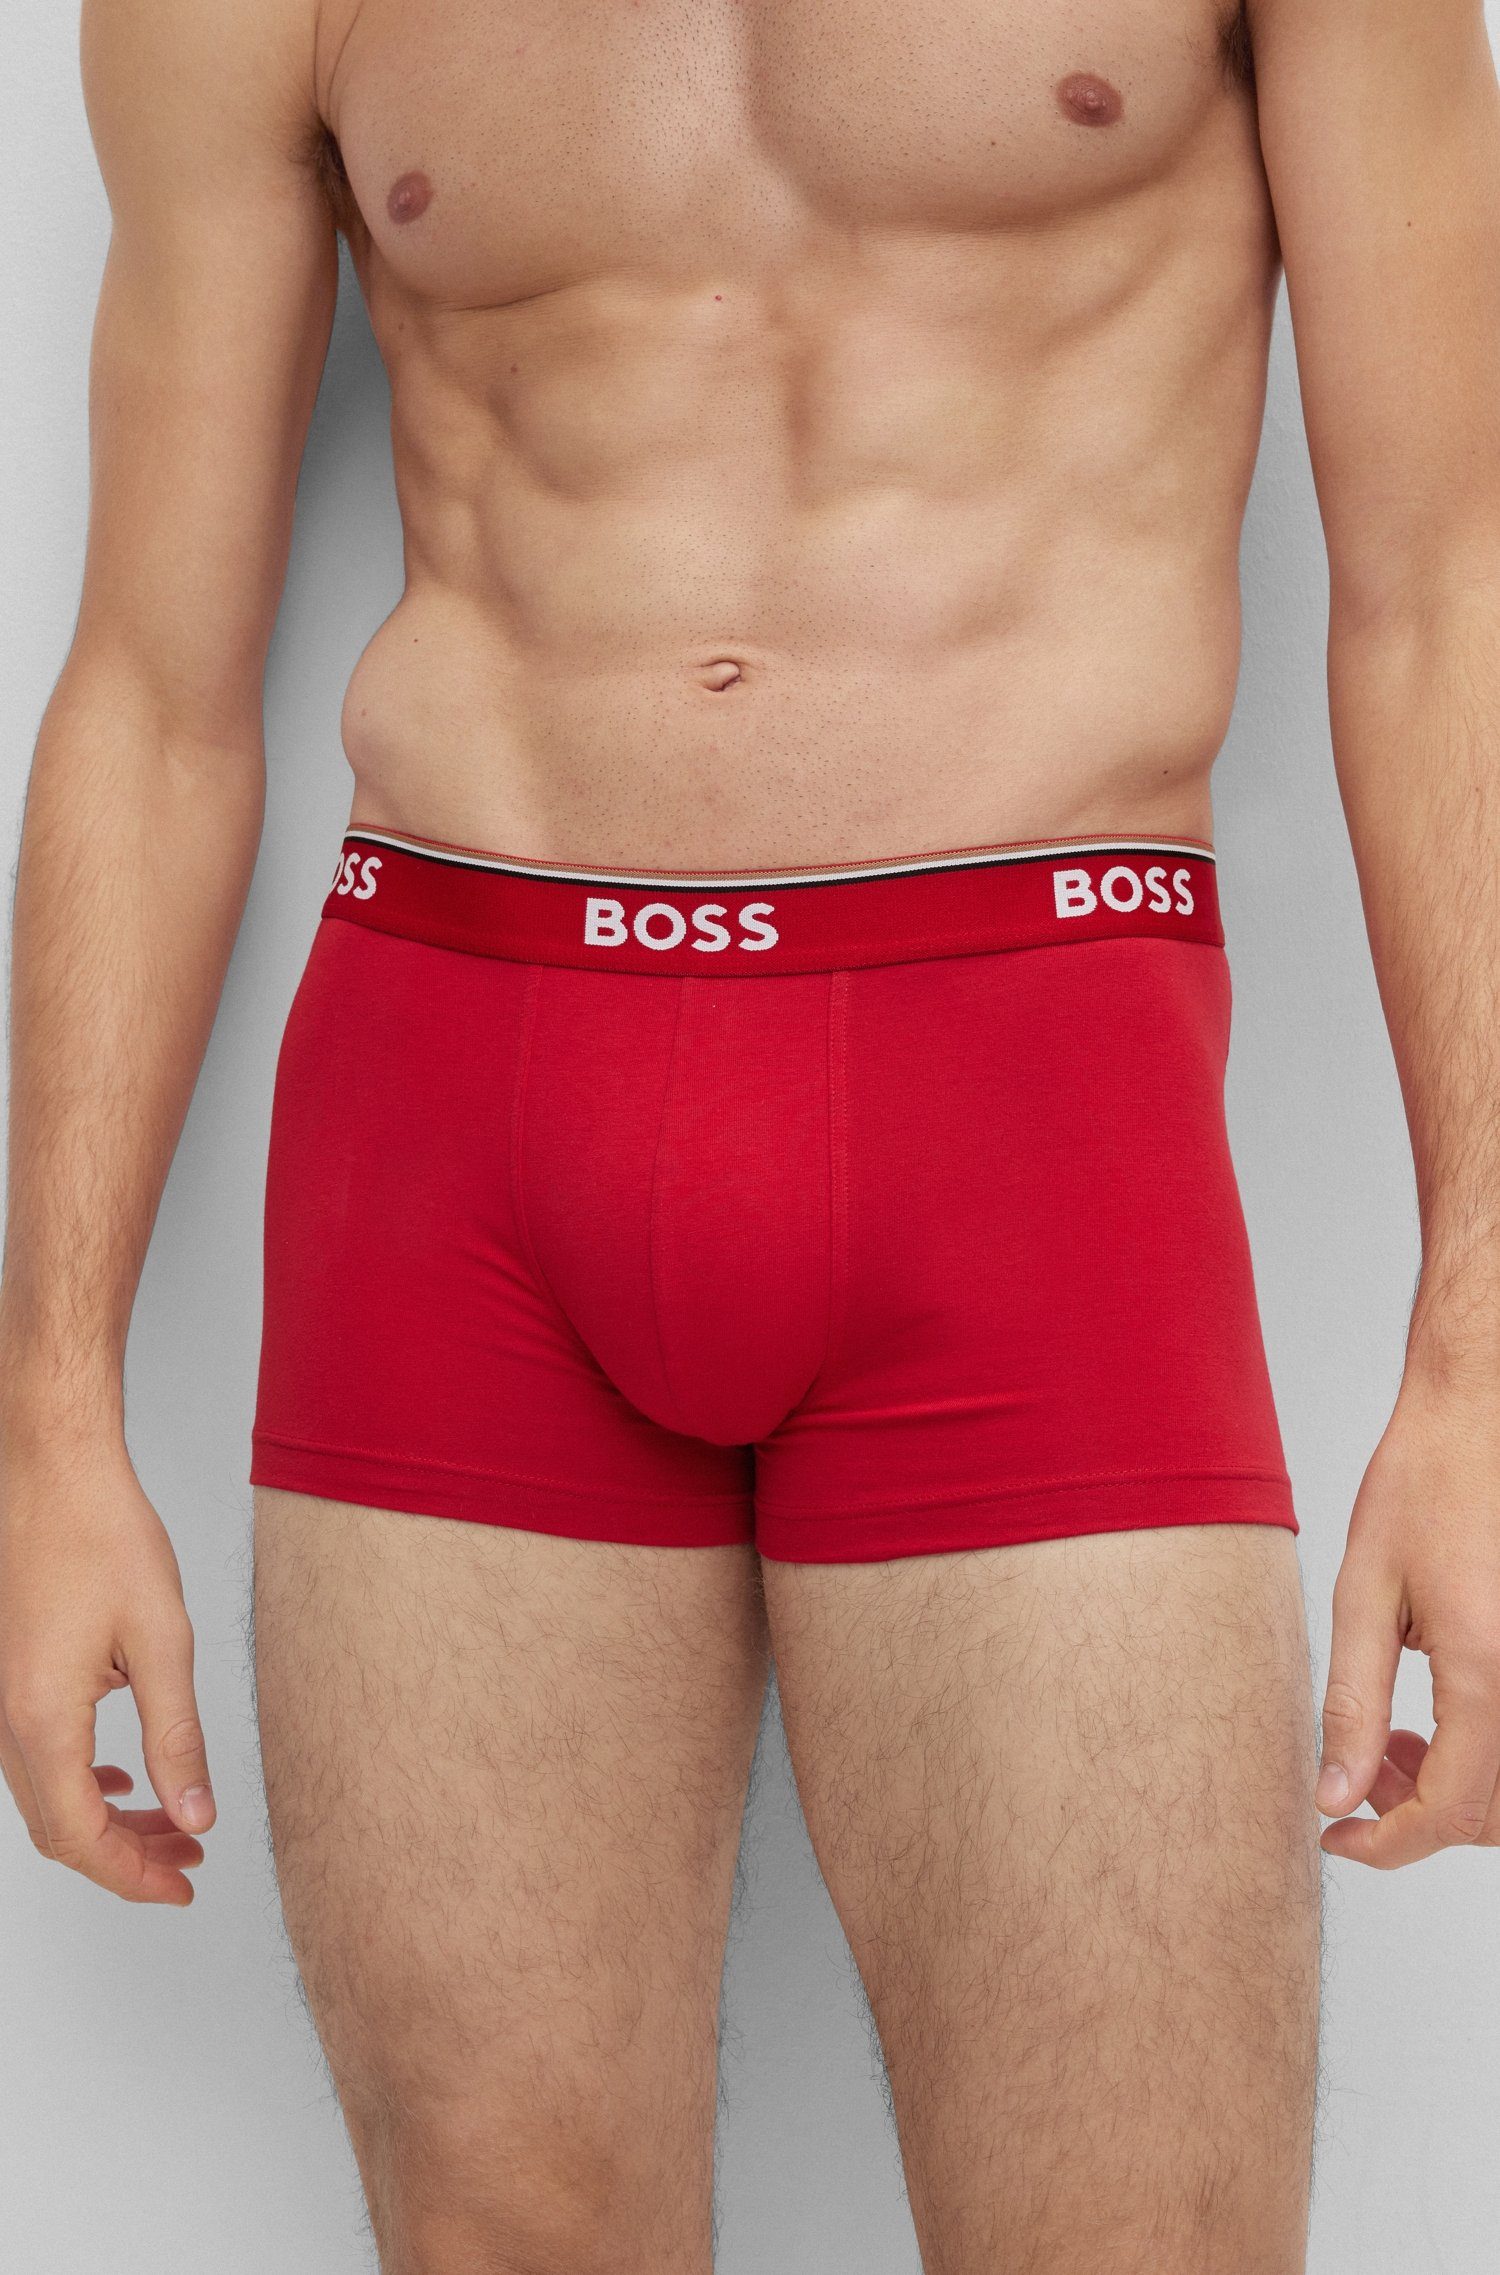 BOSS Boxer (Packung, 3er-Pack) Webbund Logo bunt mit